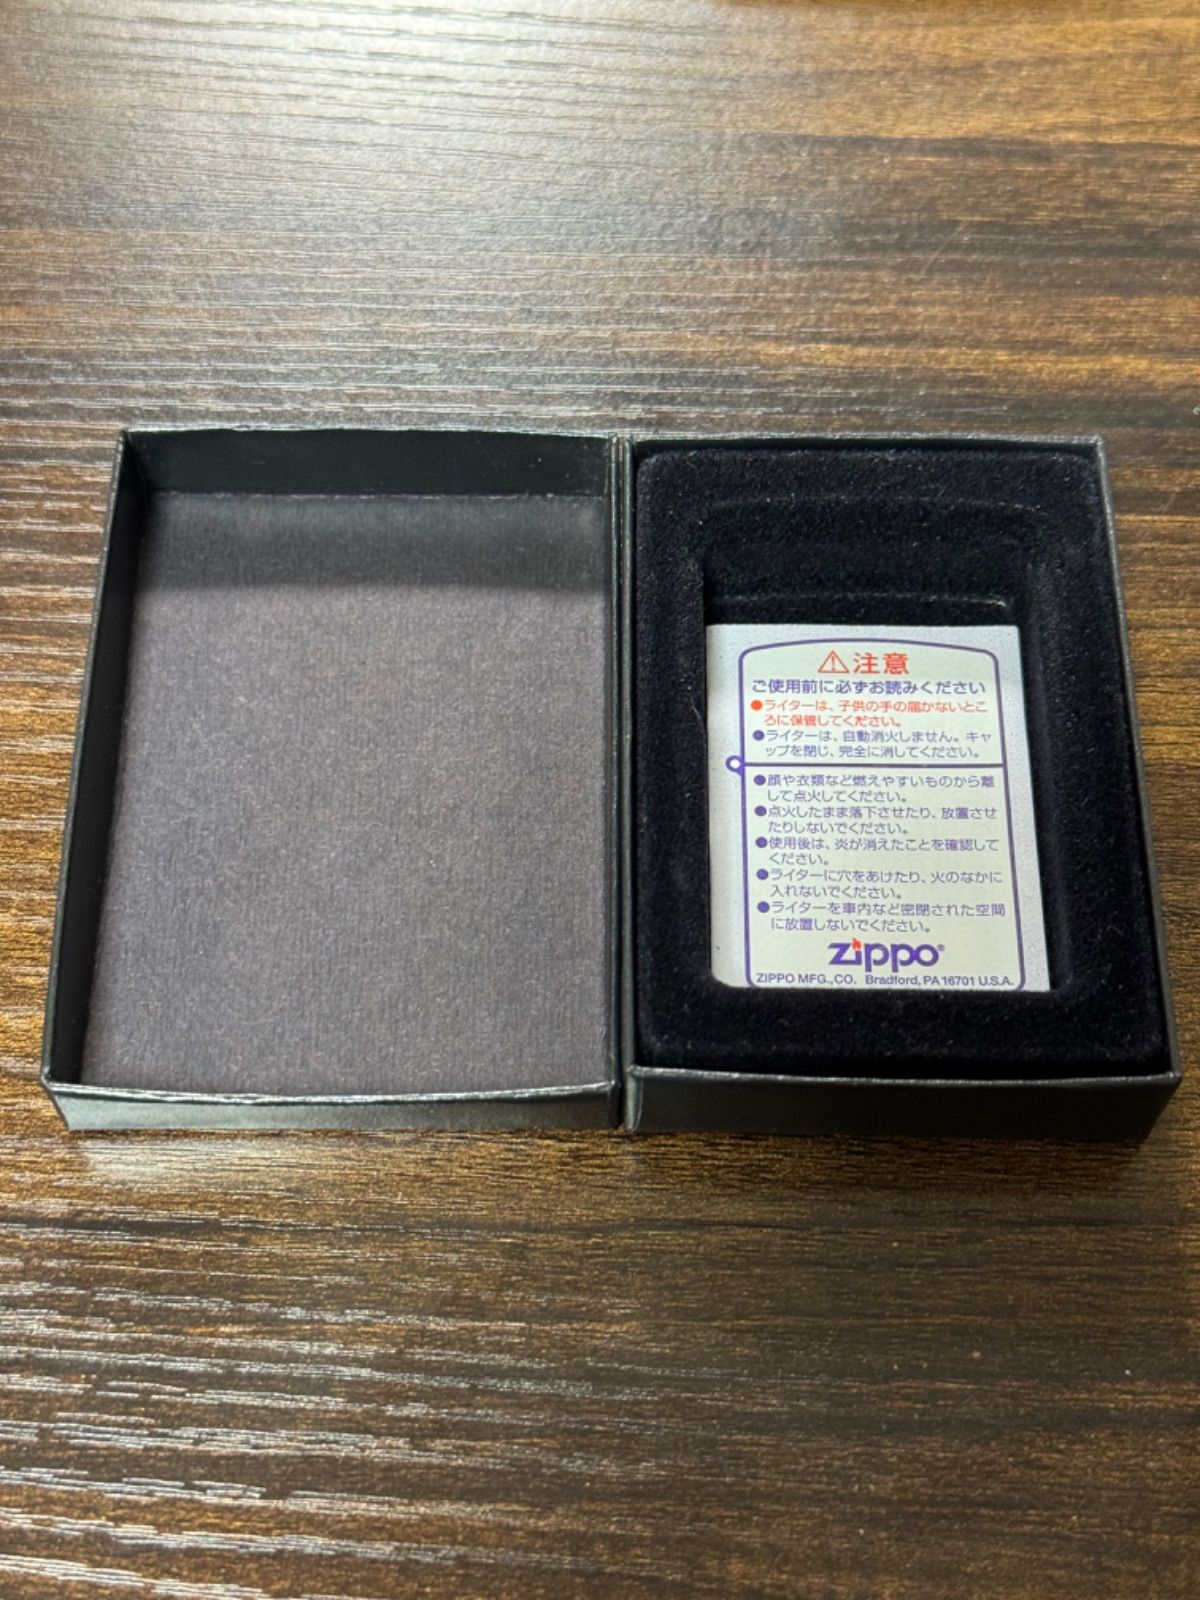 zippo ピース ブルーチタン Peace 限定品 年代物 1998年製 ゴールド刻印 たばこメーカー 懸賞品 PEACE BLUE TITAN  デットストック ゴールドインナー 同年代 1998年製 ケース 保証書 メルカリShops